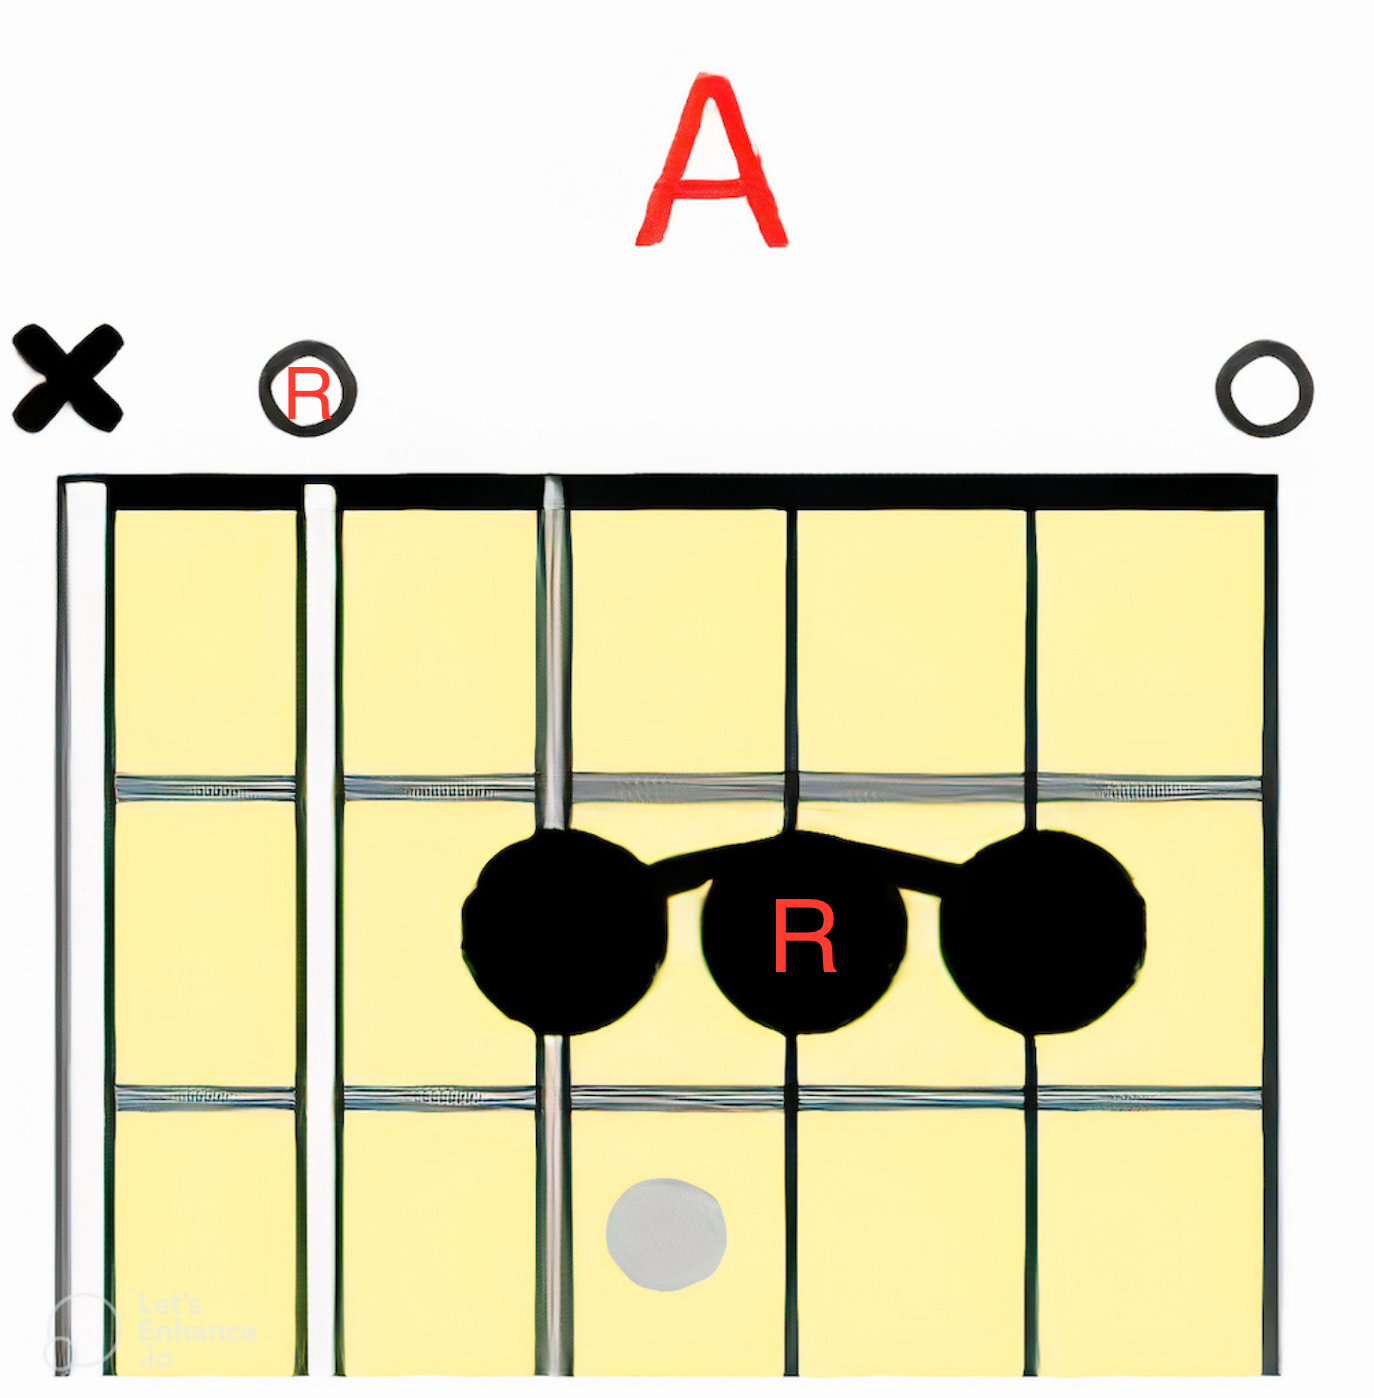 CAGED Chords: A chord diagram